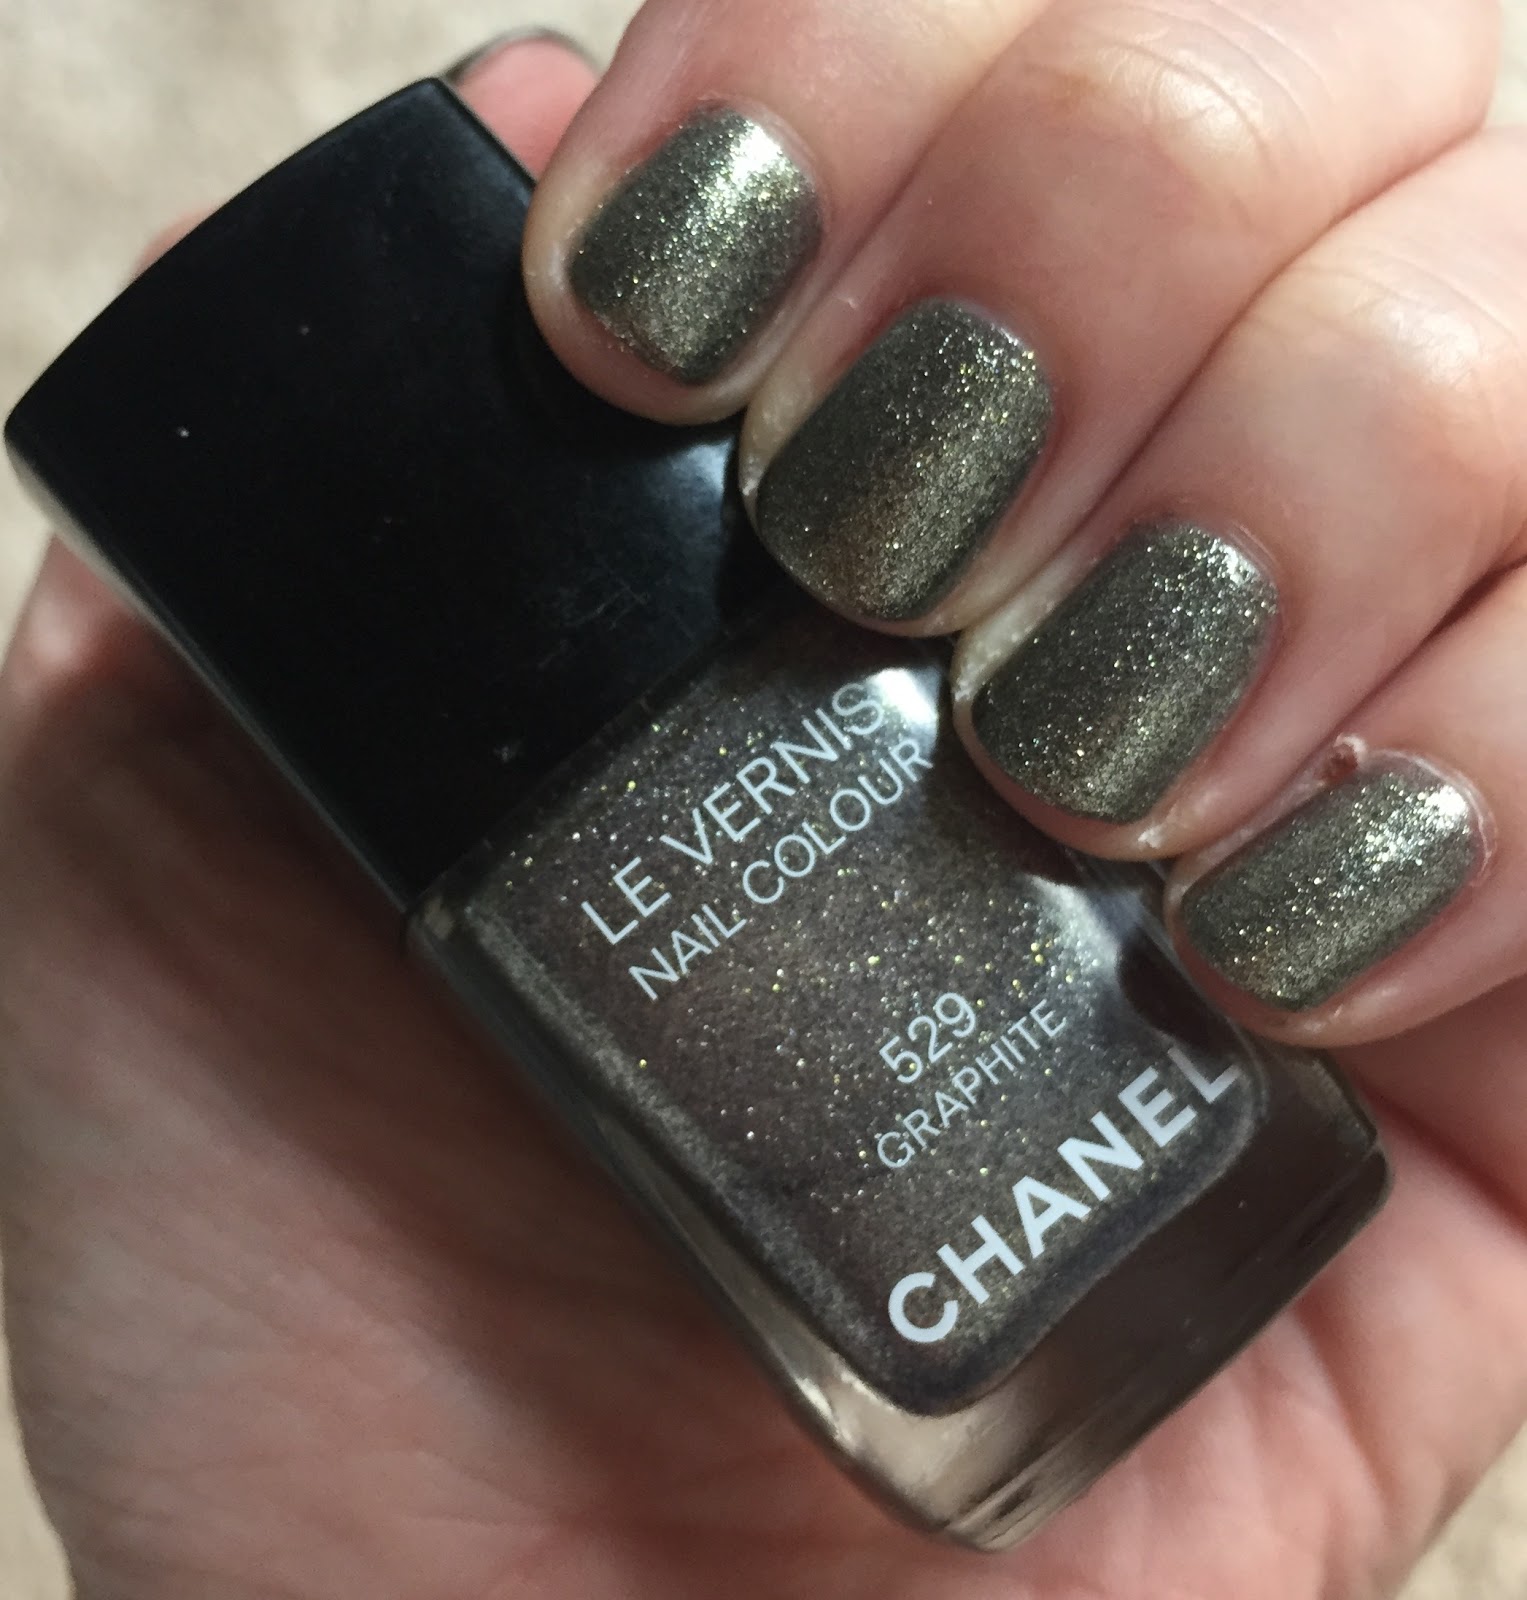 Chanel Graphite Nail Polish: Review and pics